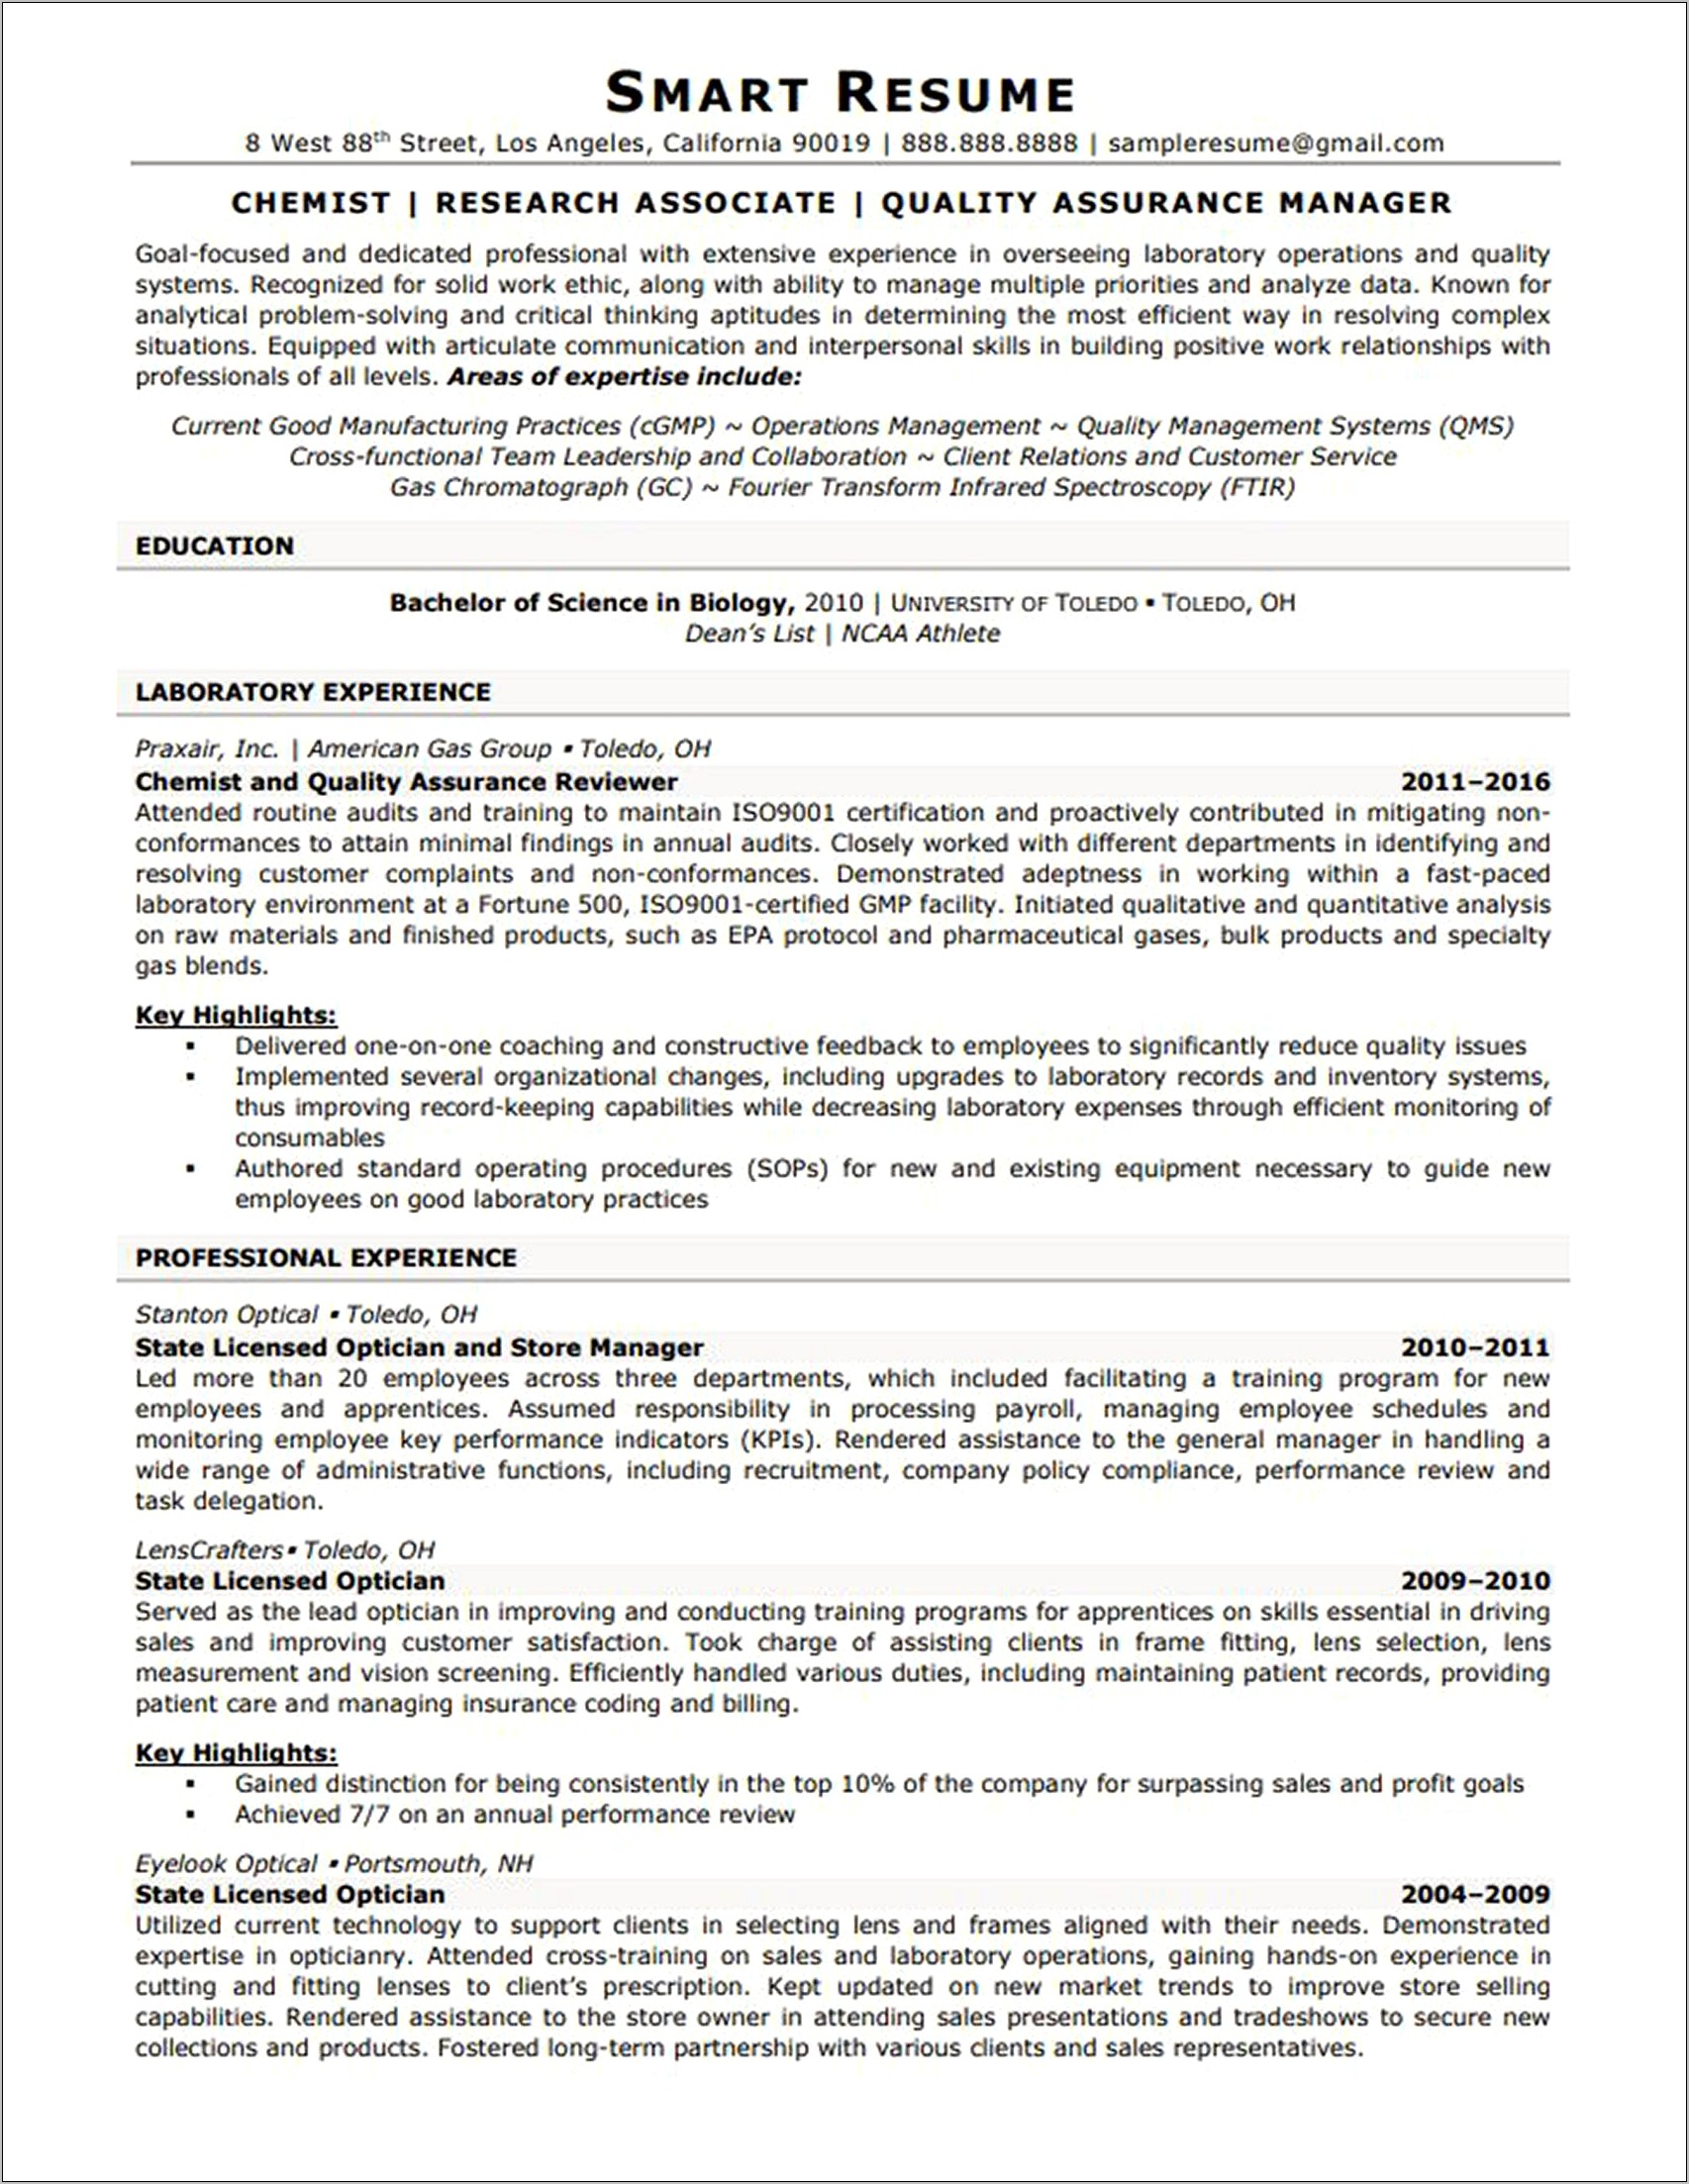 Athlete Basic Resume For Entry Level Job